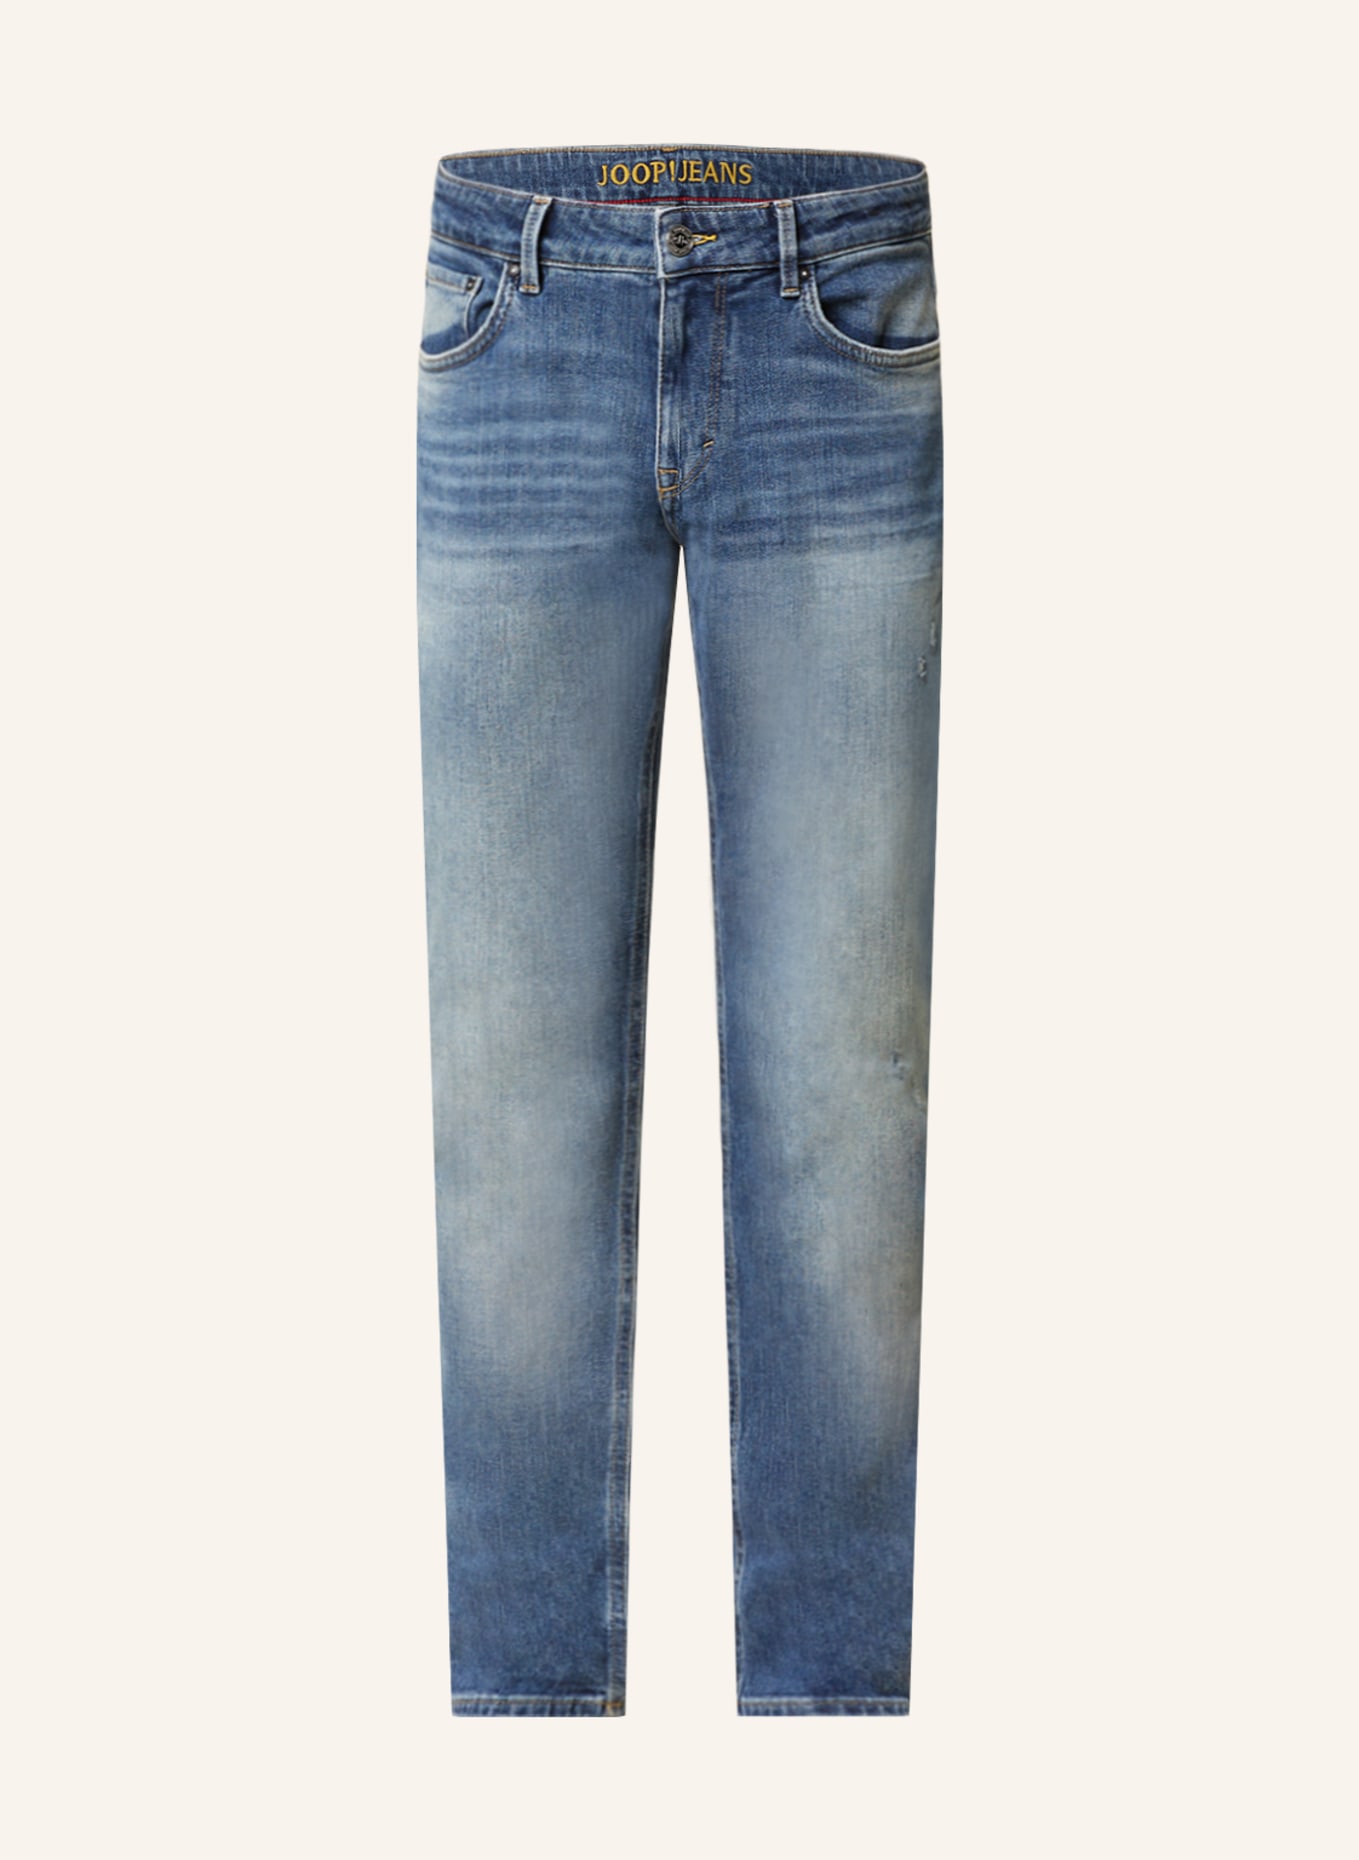 JOOP! JEANS Jeans STEPHEN Slim Fit, Farbe: 422 Medium Blue                422 (Bild 1)